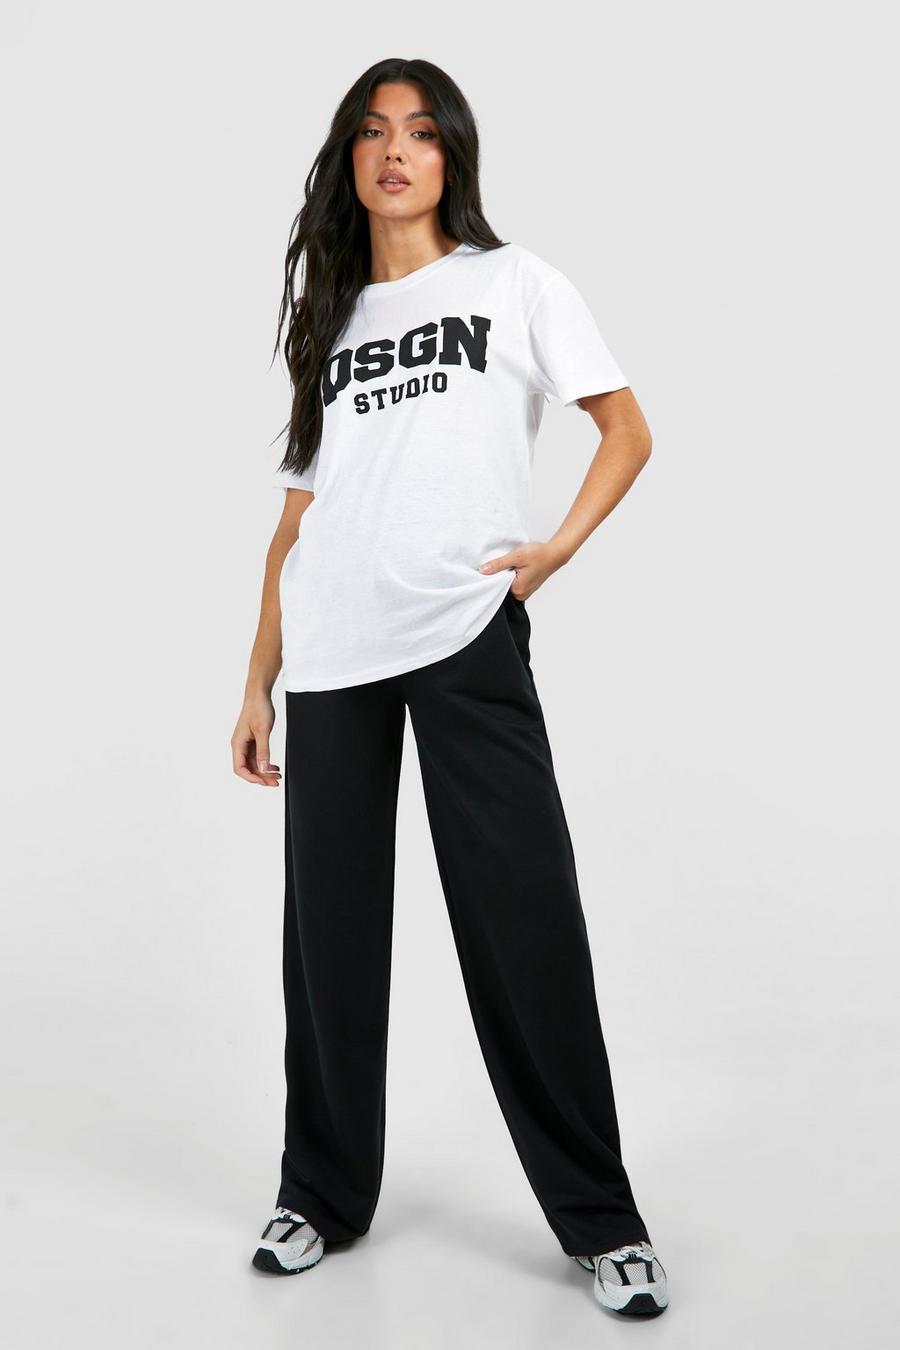 Chándal Premamá con camiseta Dsgn Studio, Black